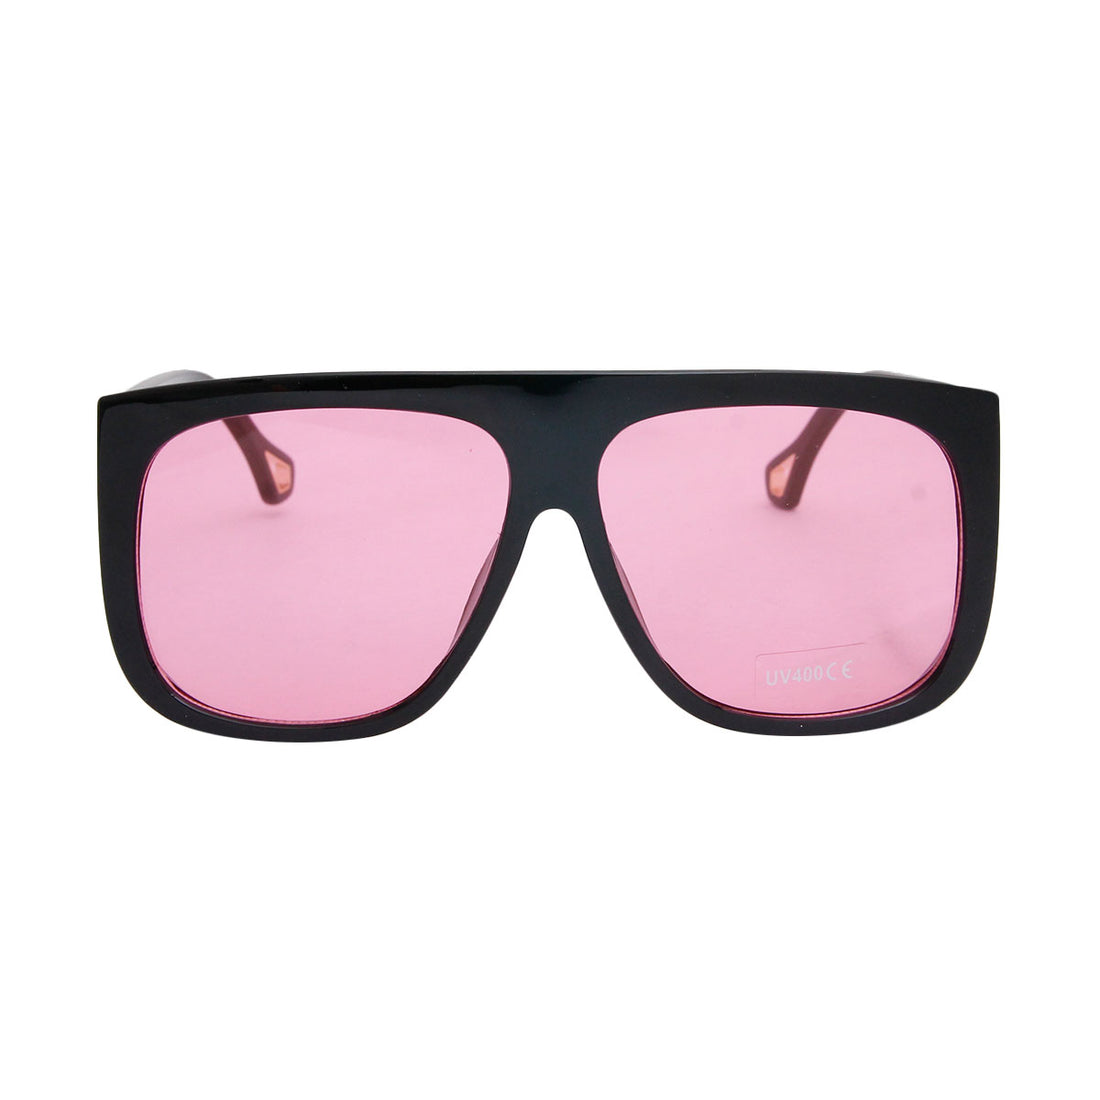 Pink Lens Side Shield Sunglasses